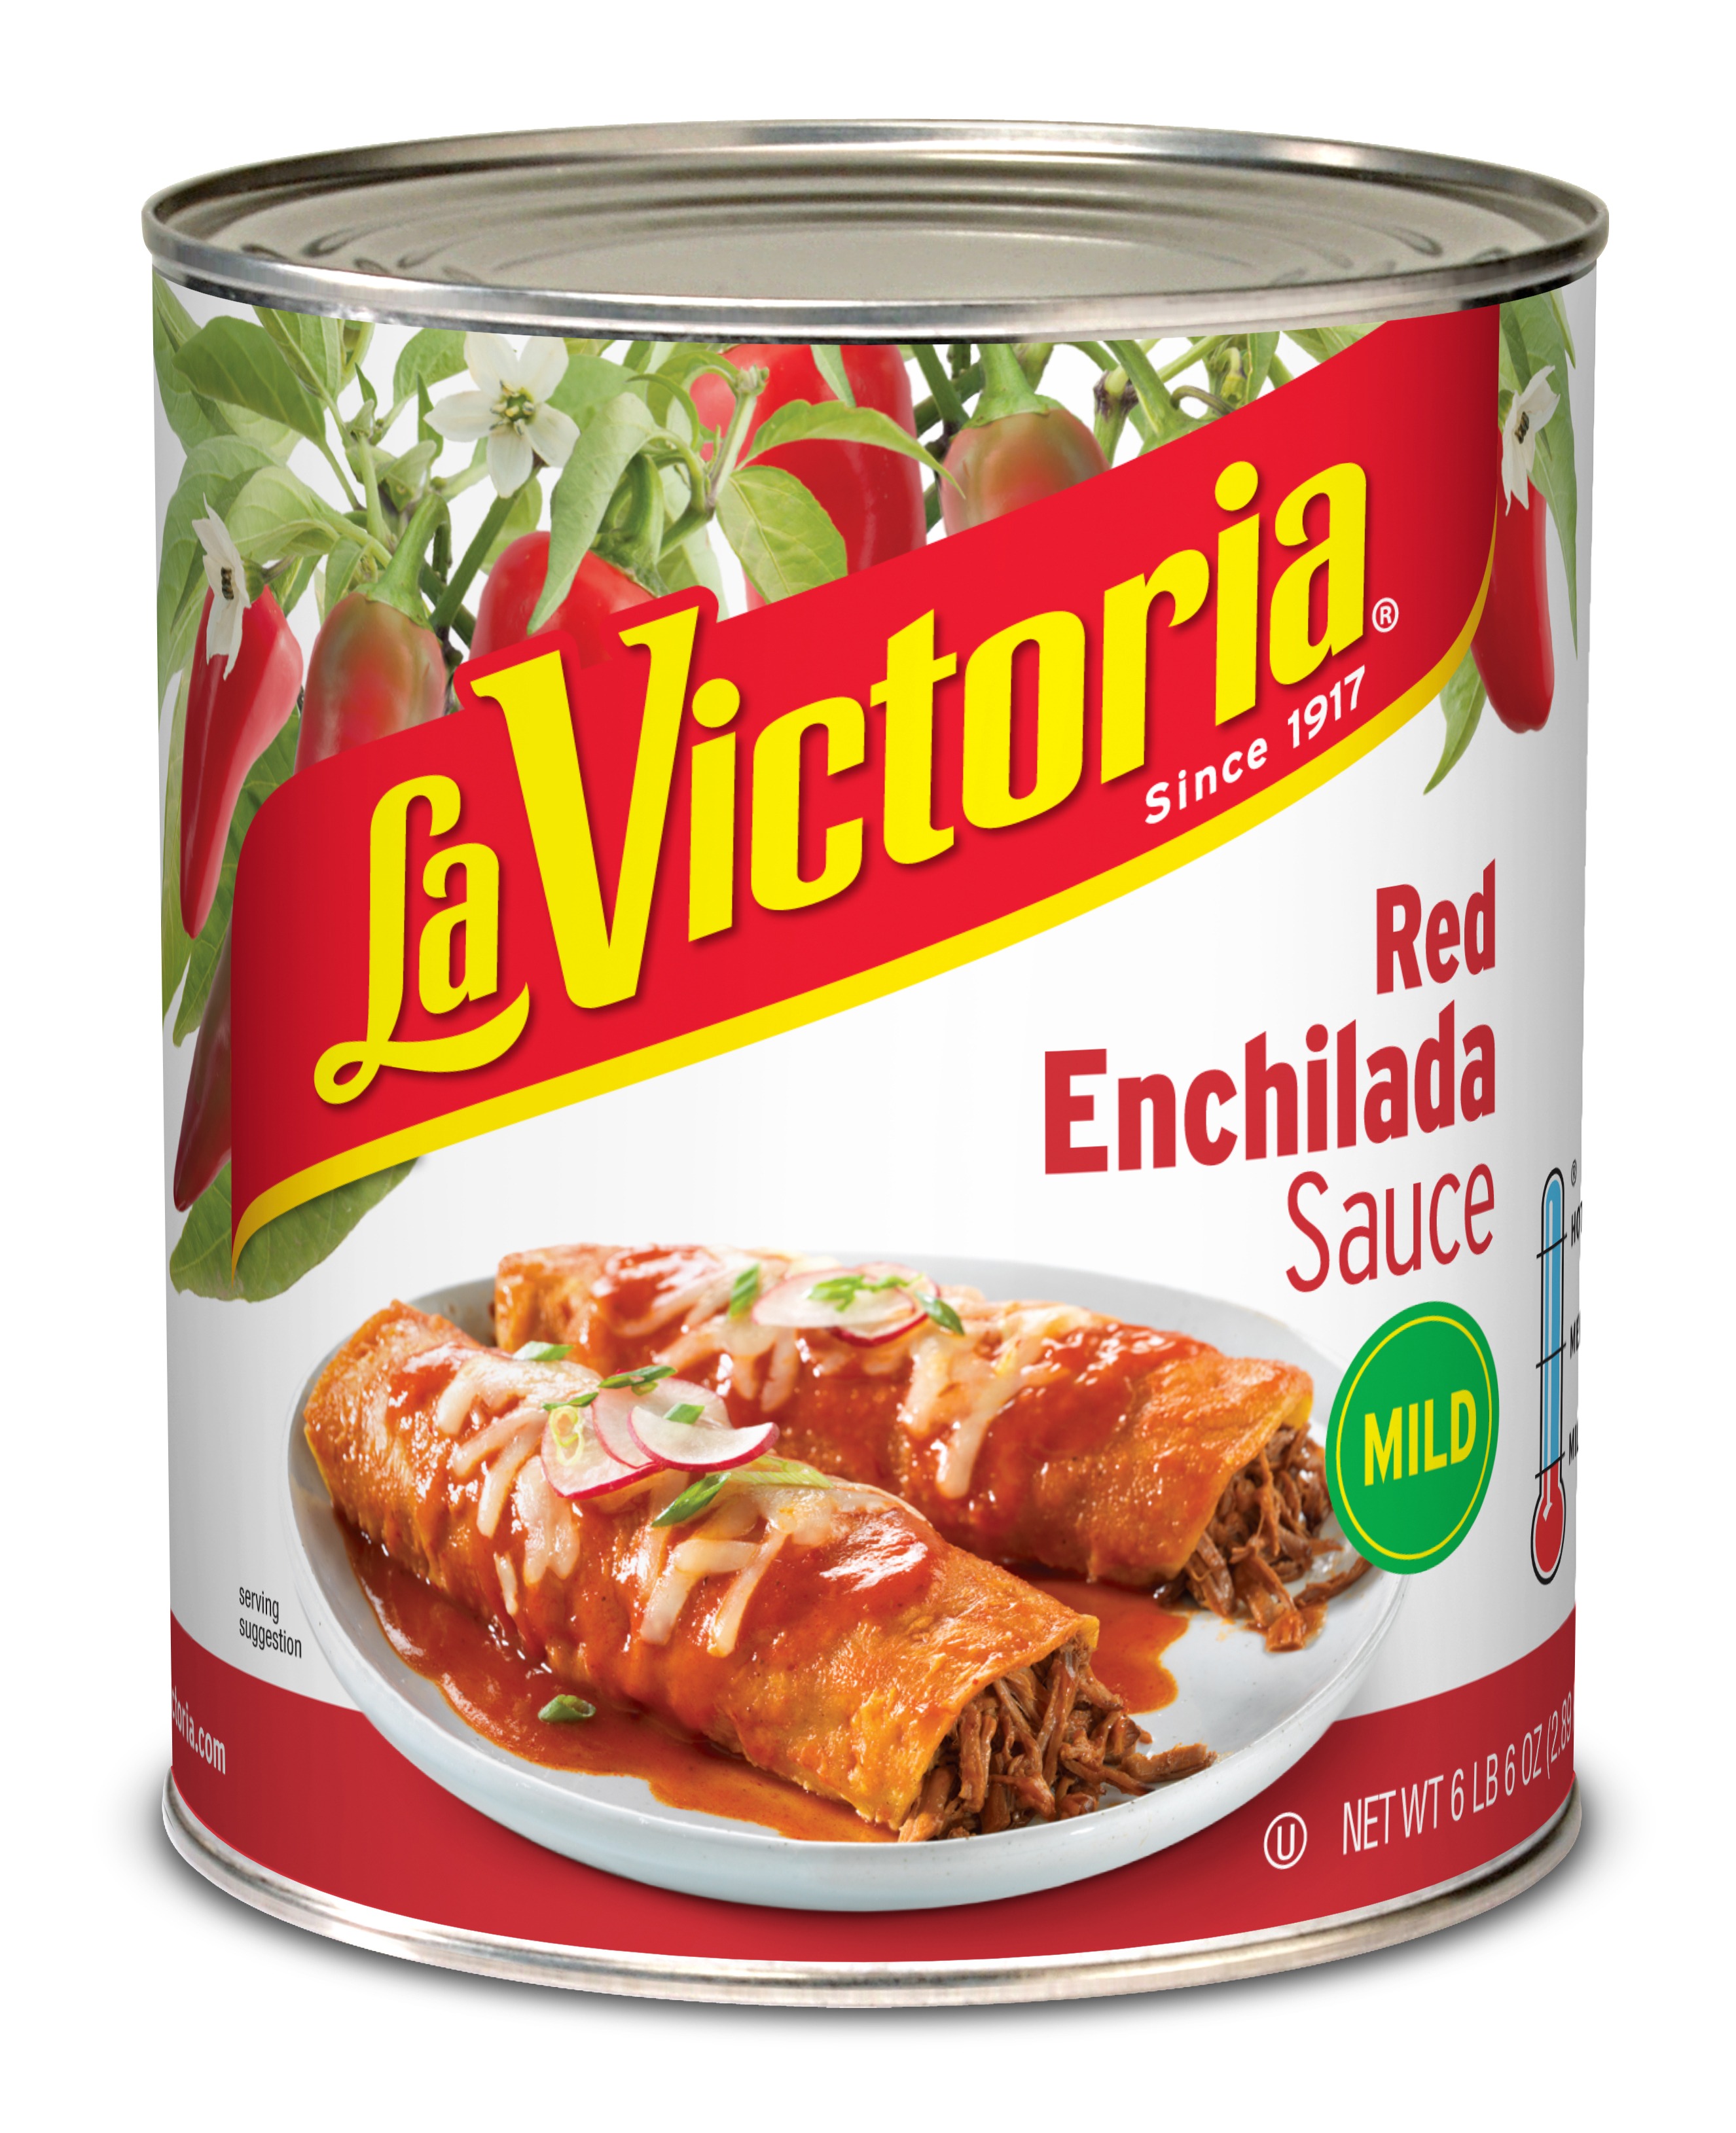 https://www.megamexfoodservice.com/wp-content/uploads/2018/09/LV-Enchilada-Red-Sauce-6lb-6oz-Can.jpg